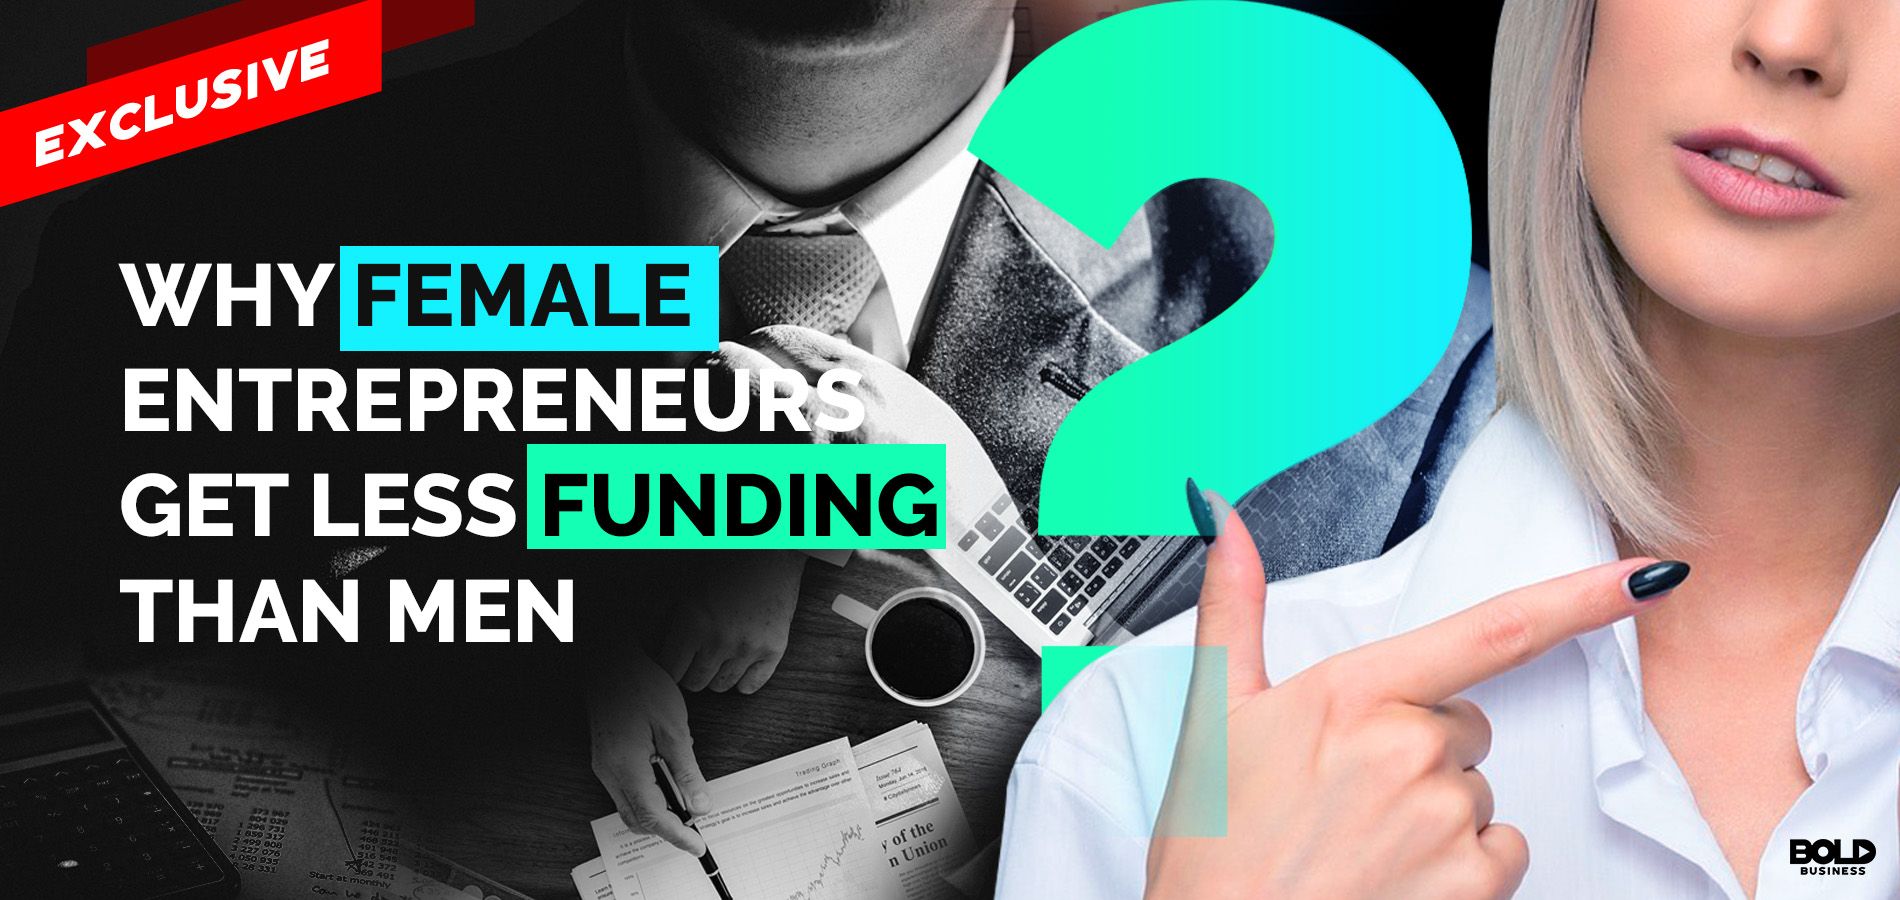 women entrepreneurs get less funding than men